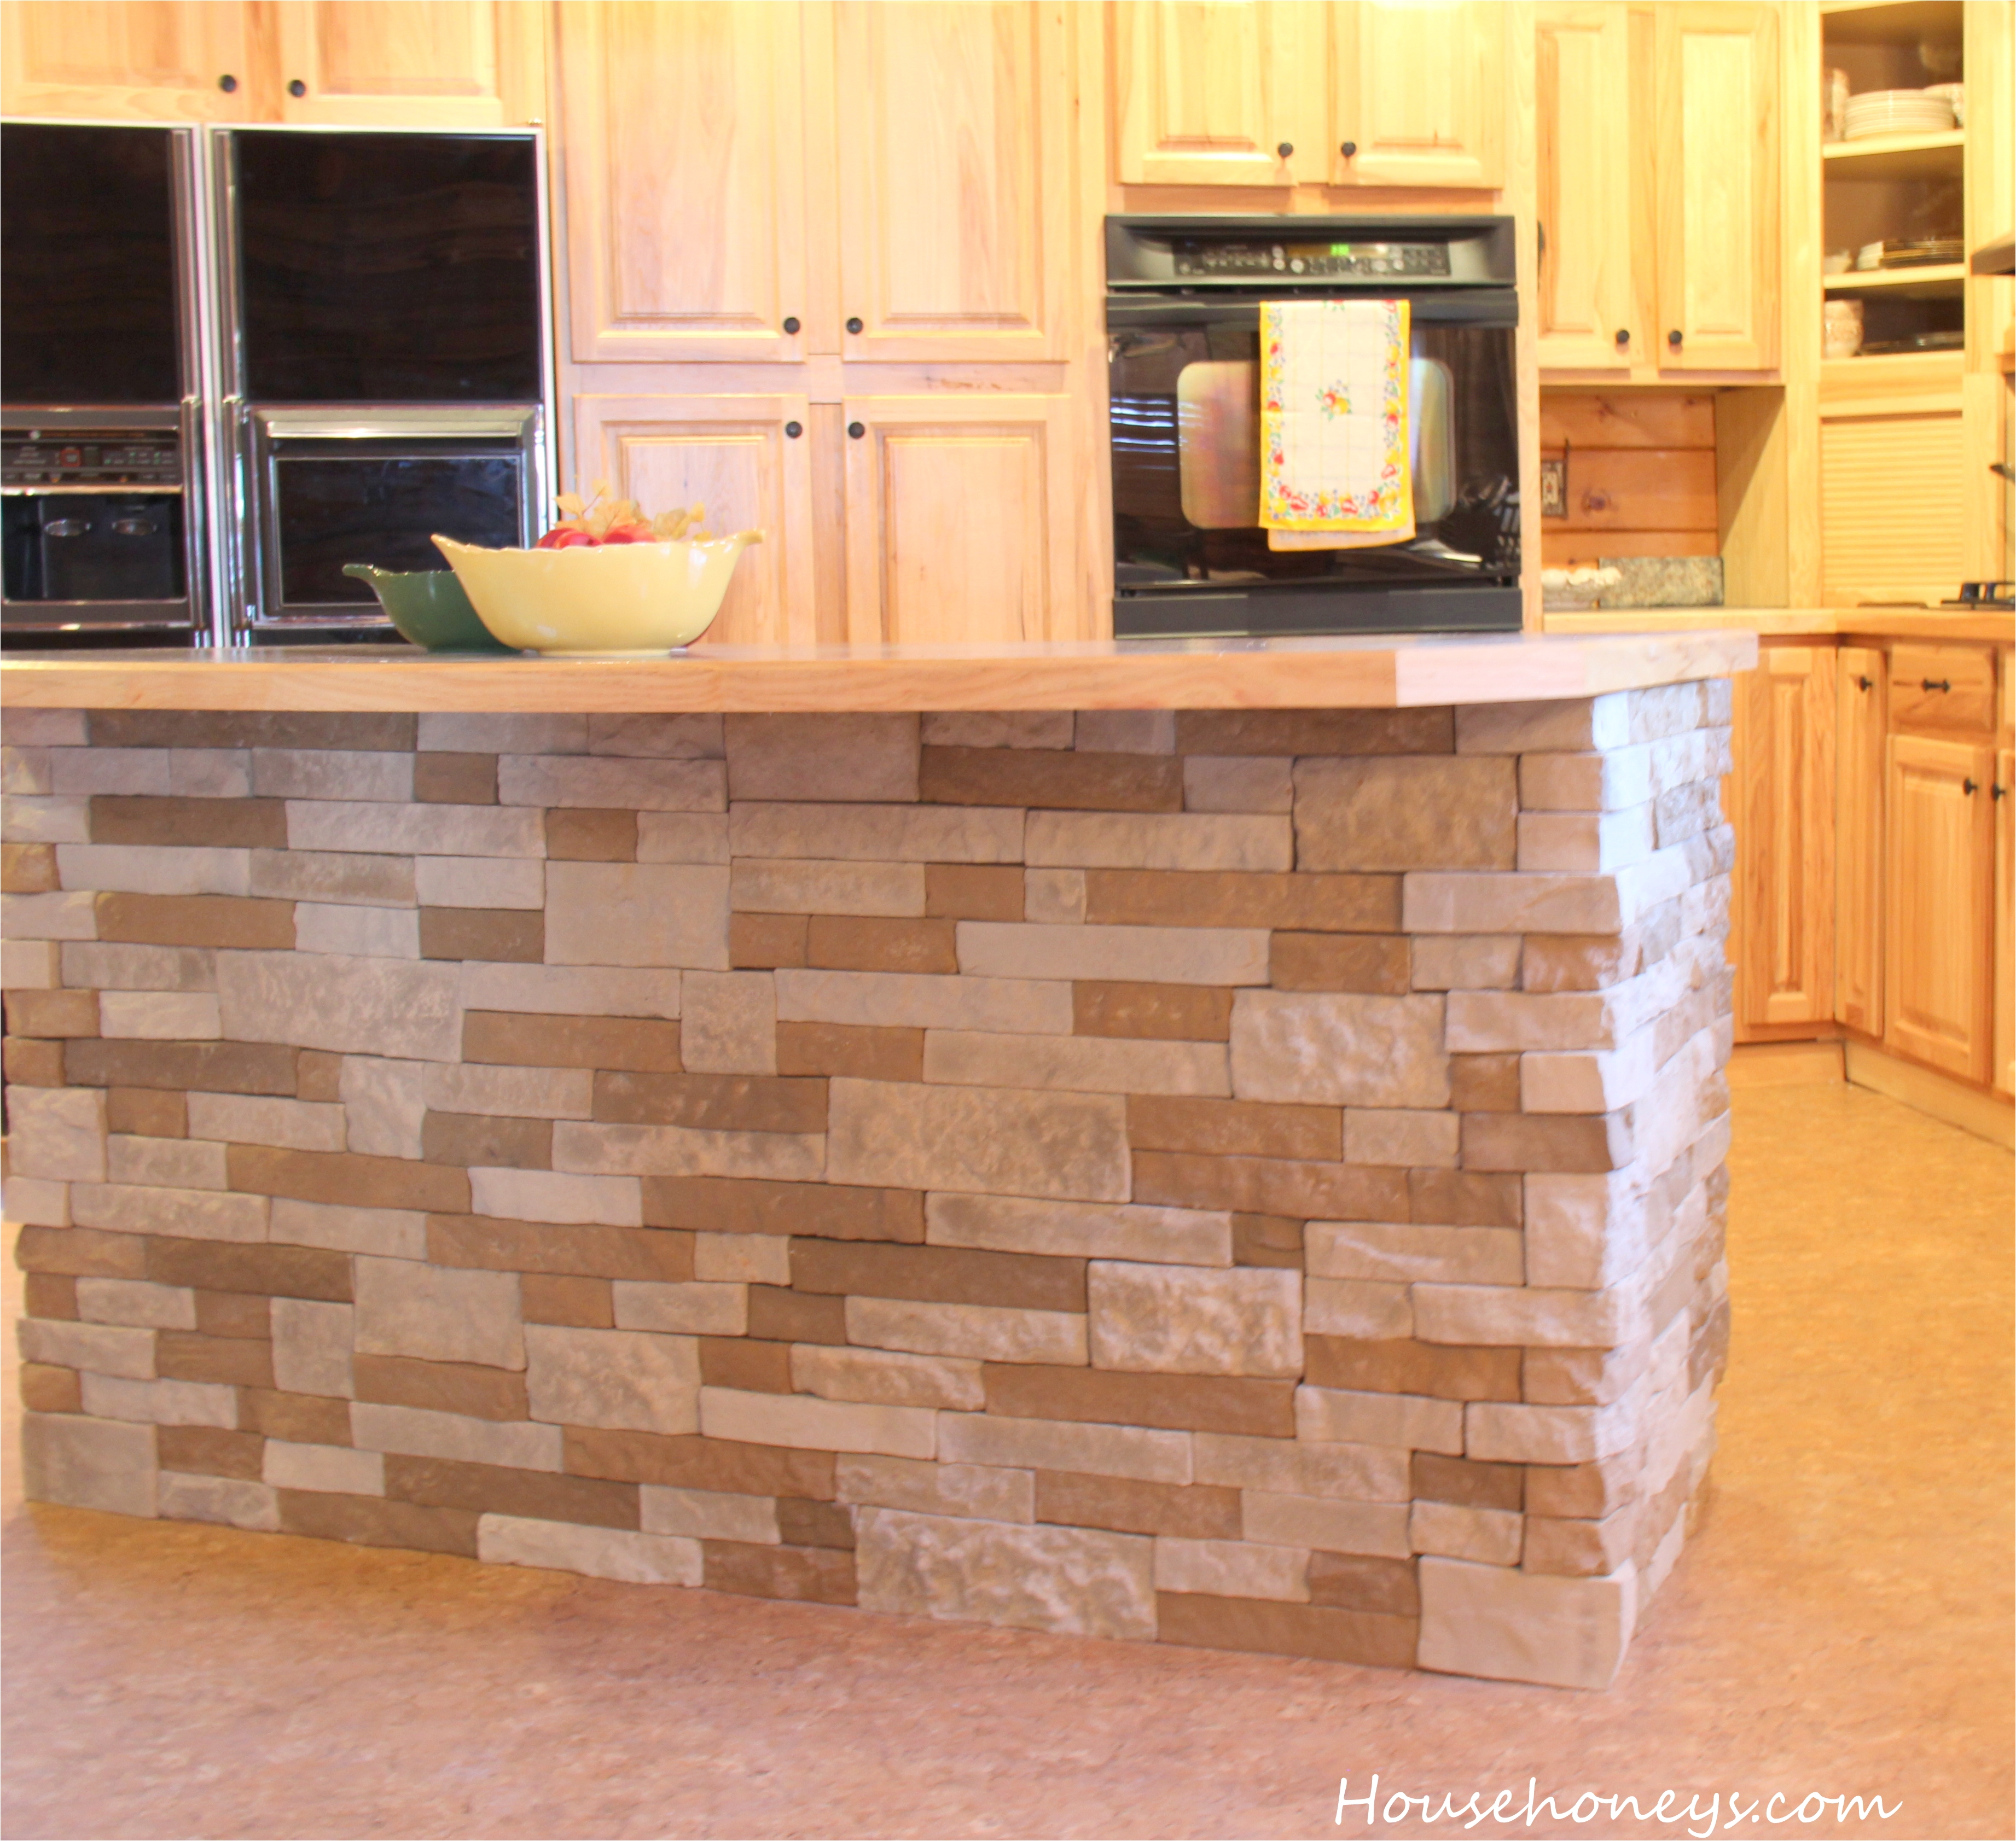 backsplash lowes building house impressive kitchen big cabinet plus awesome granite flooring and bath granite wall decor